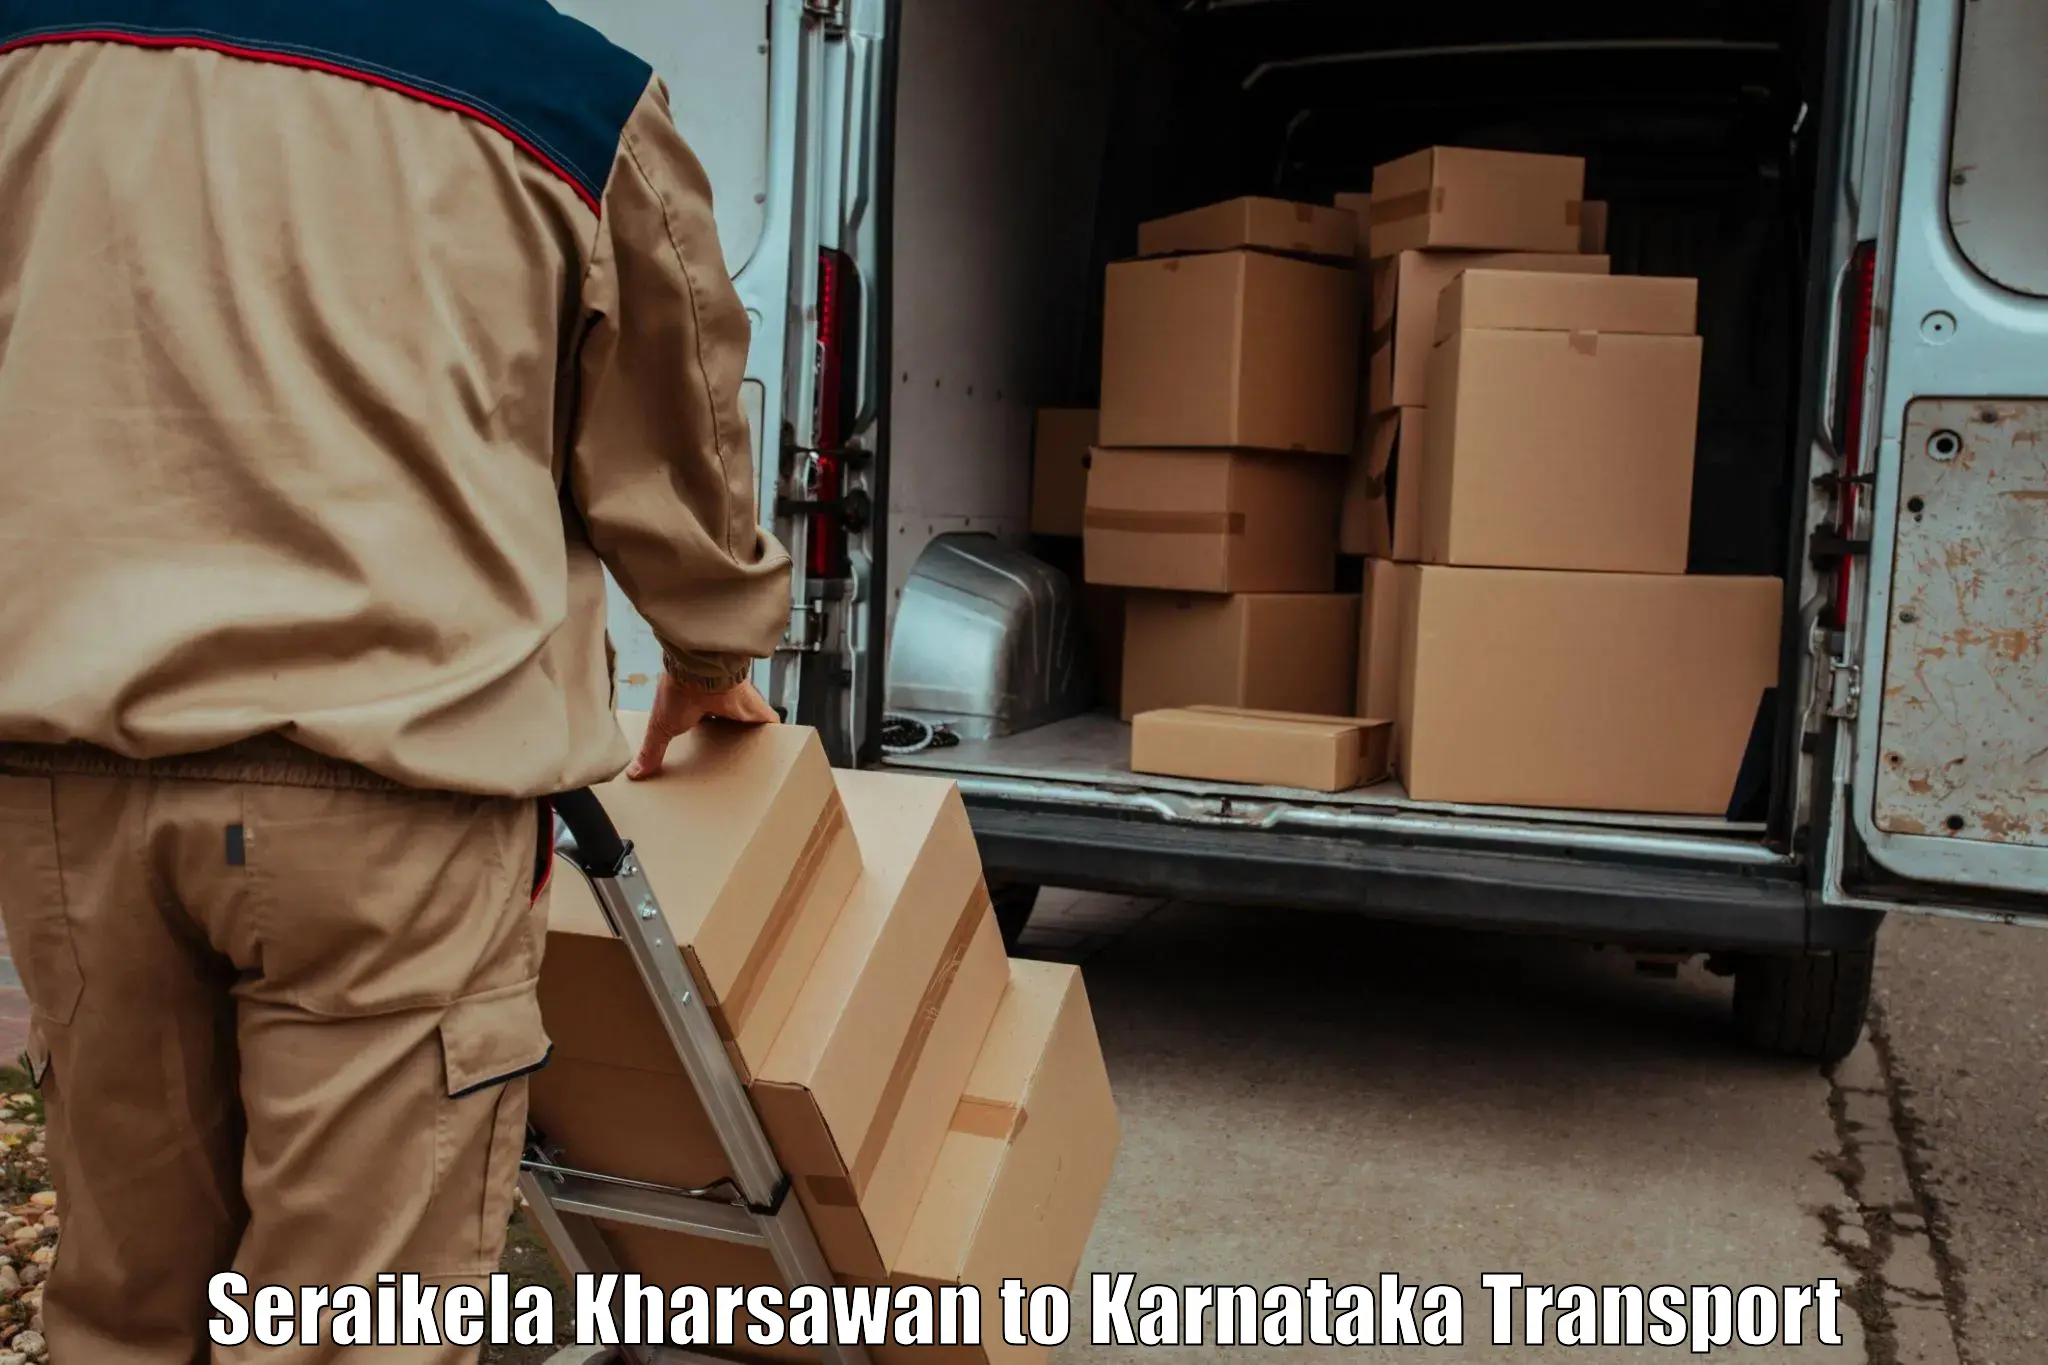 Truck transport companies in India Seraikela Kharsawan to Udupi